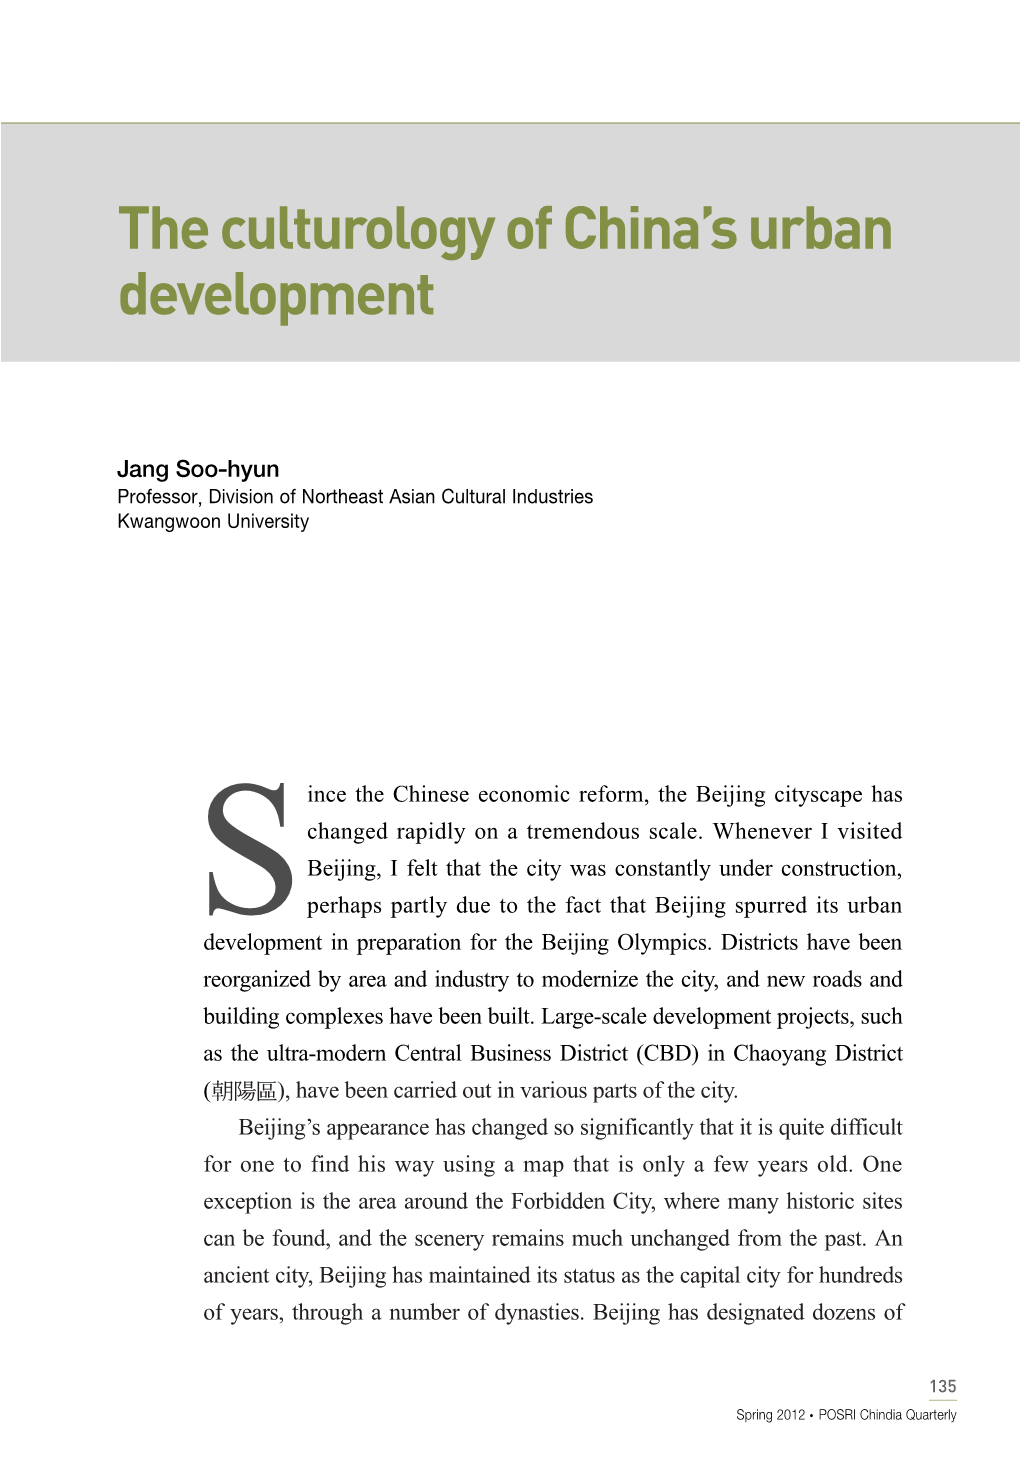 The Culturology of China's Urban Development